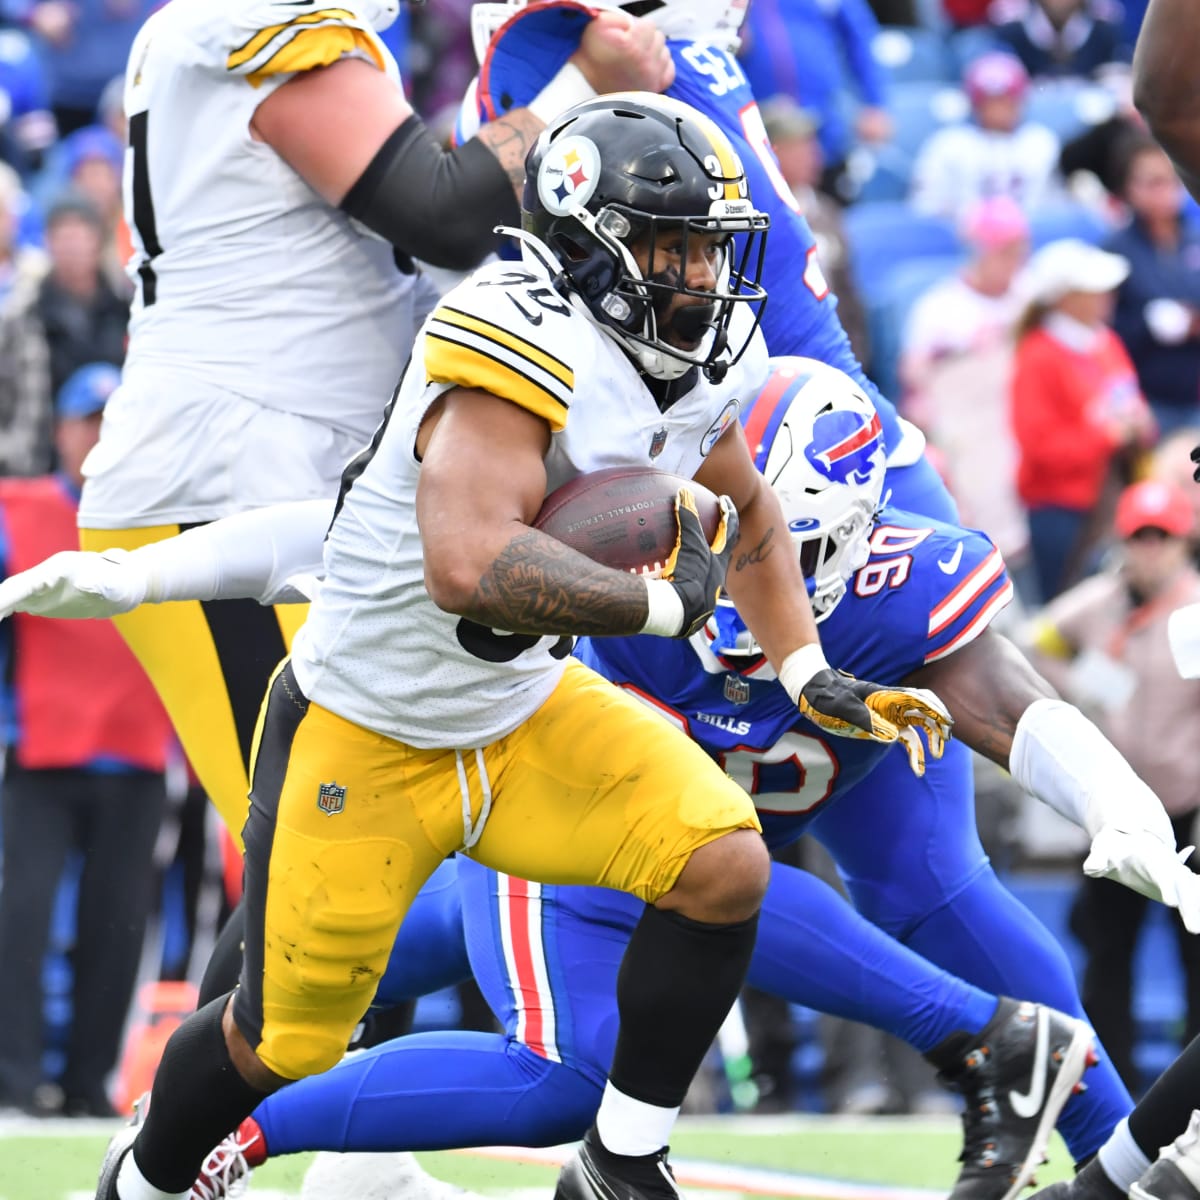 Bills overwhelm Steelers in first half, win 38-3 in dominant